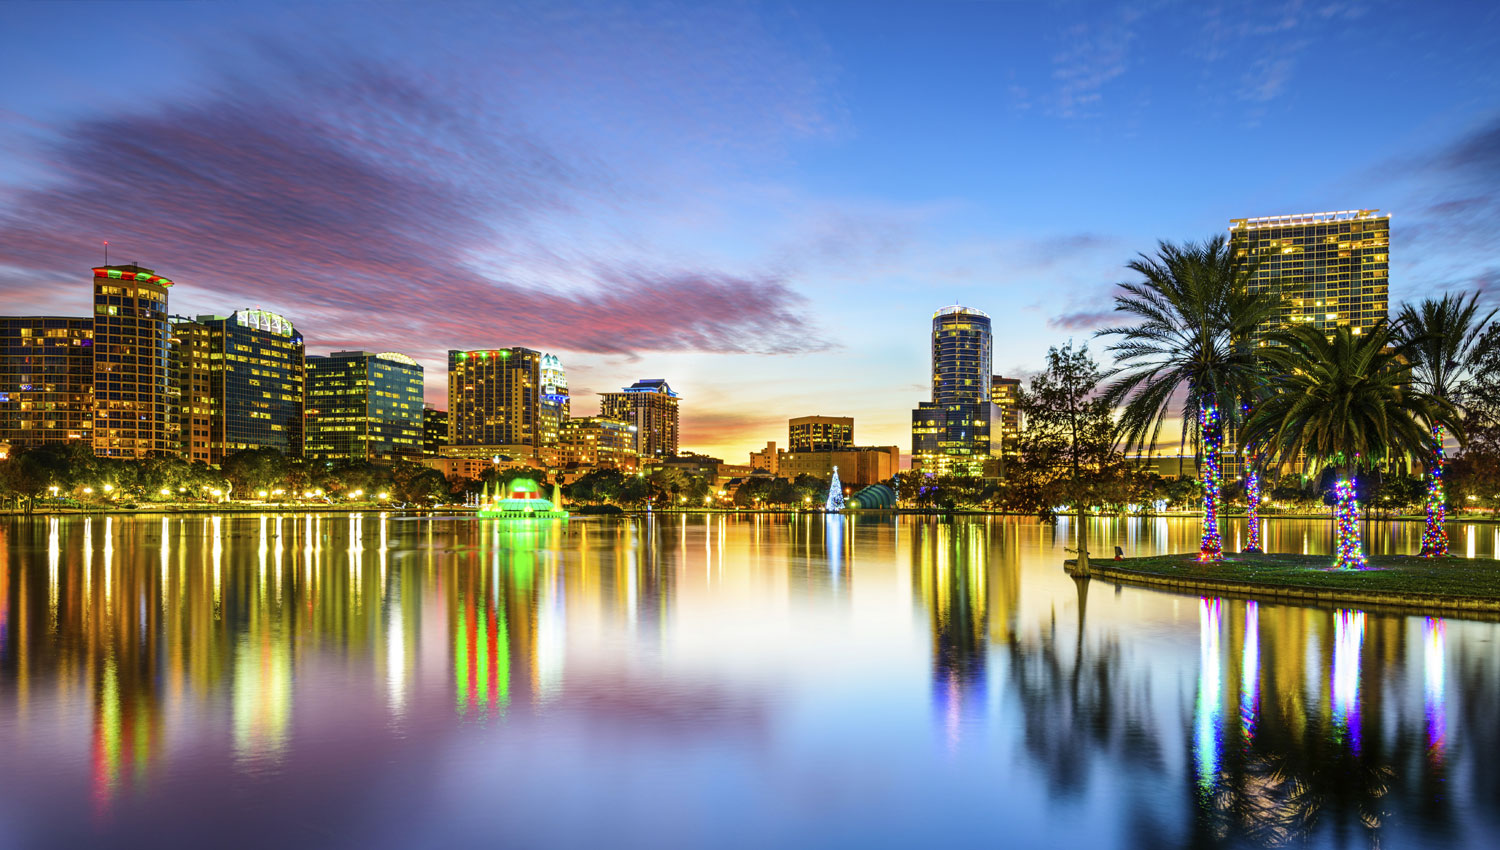 beautiful Orlando night lights that glare off city water